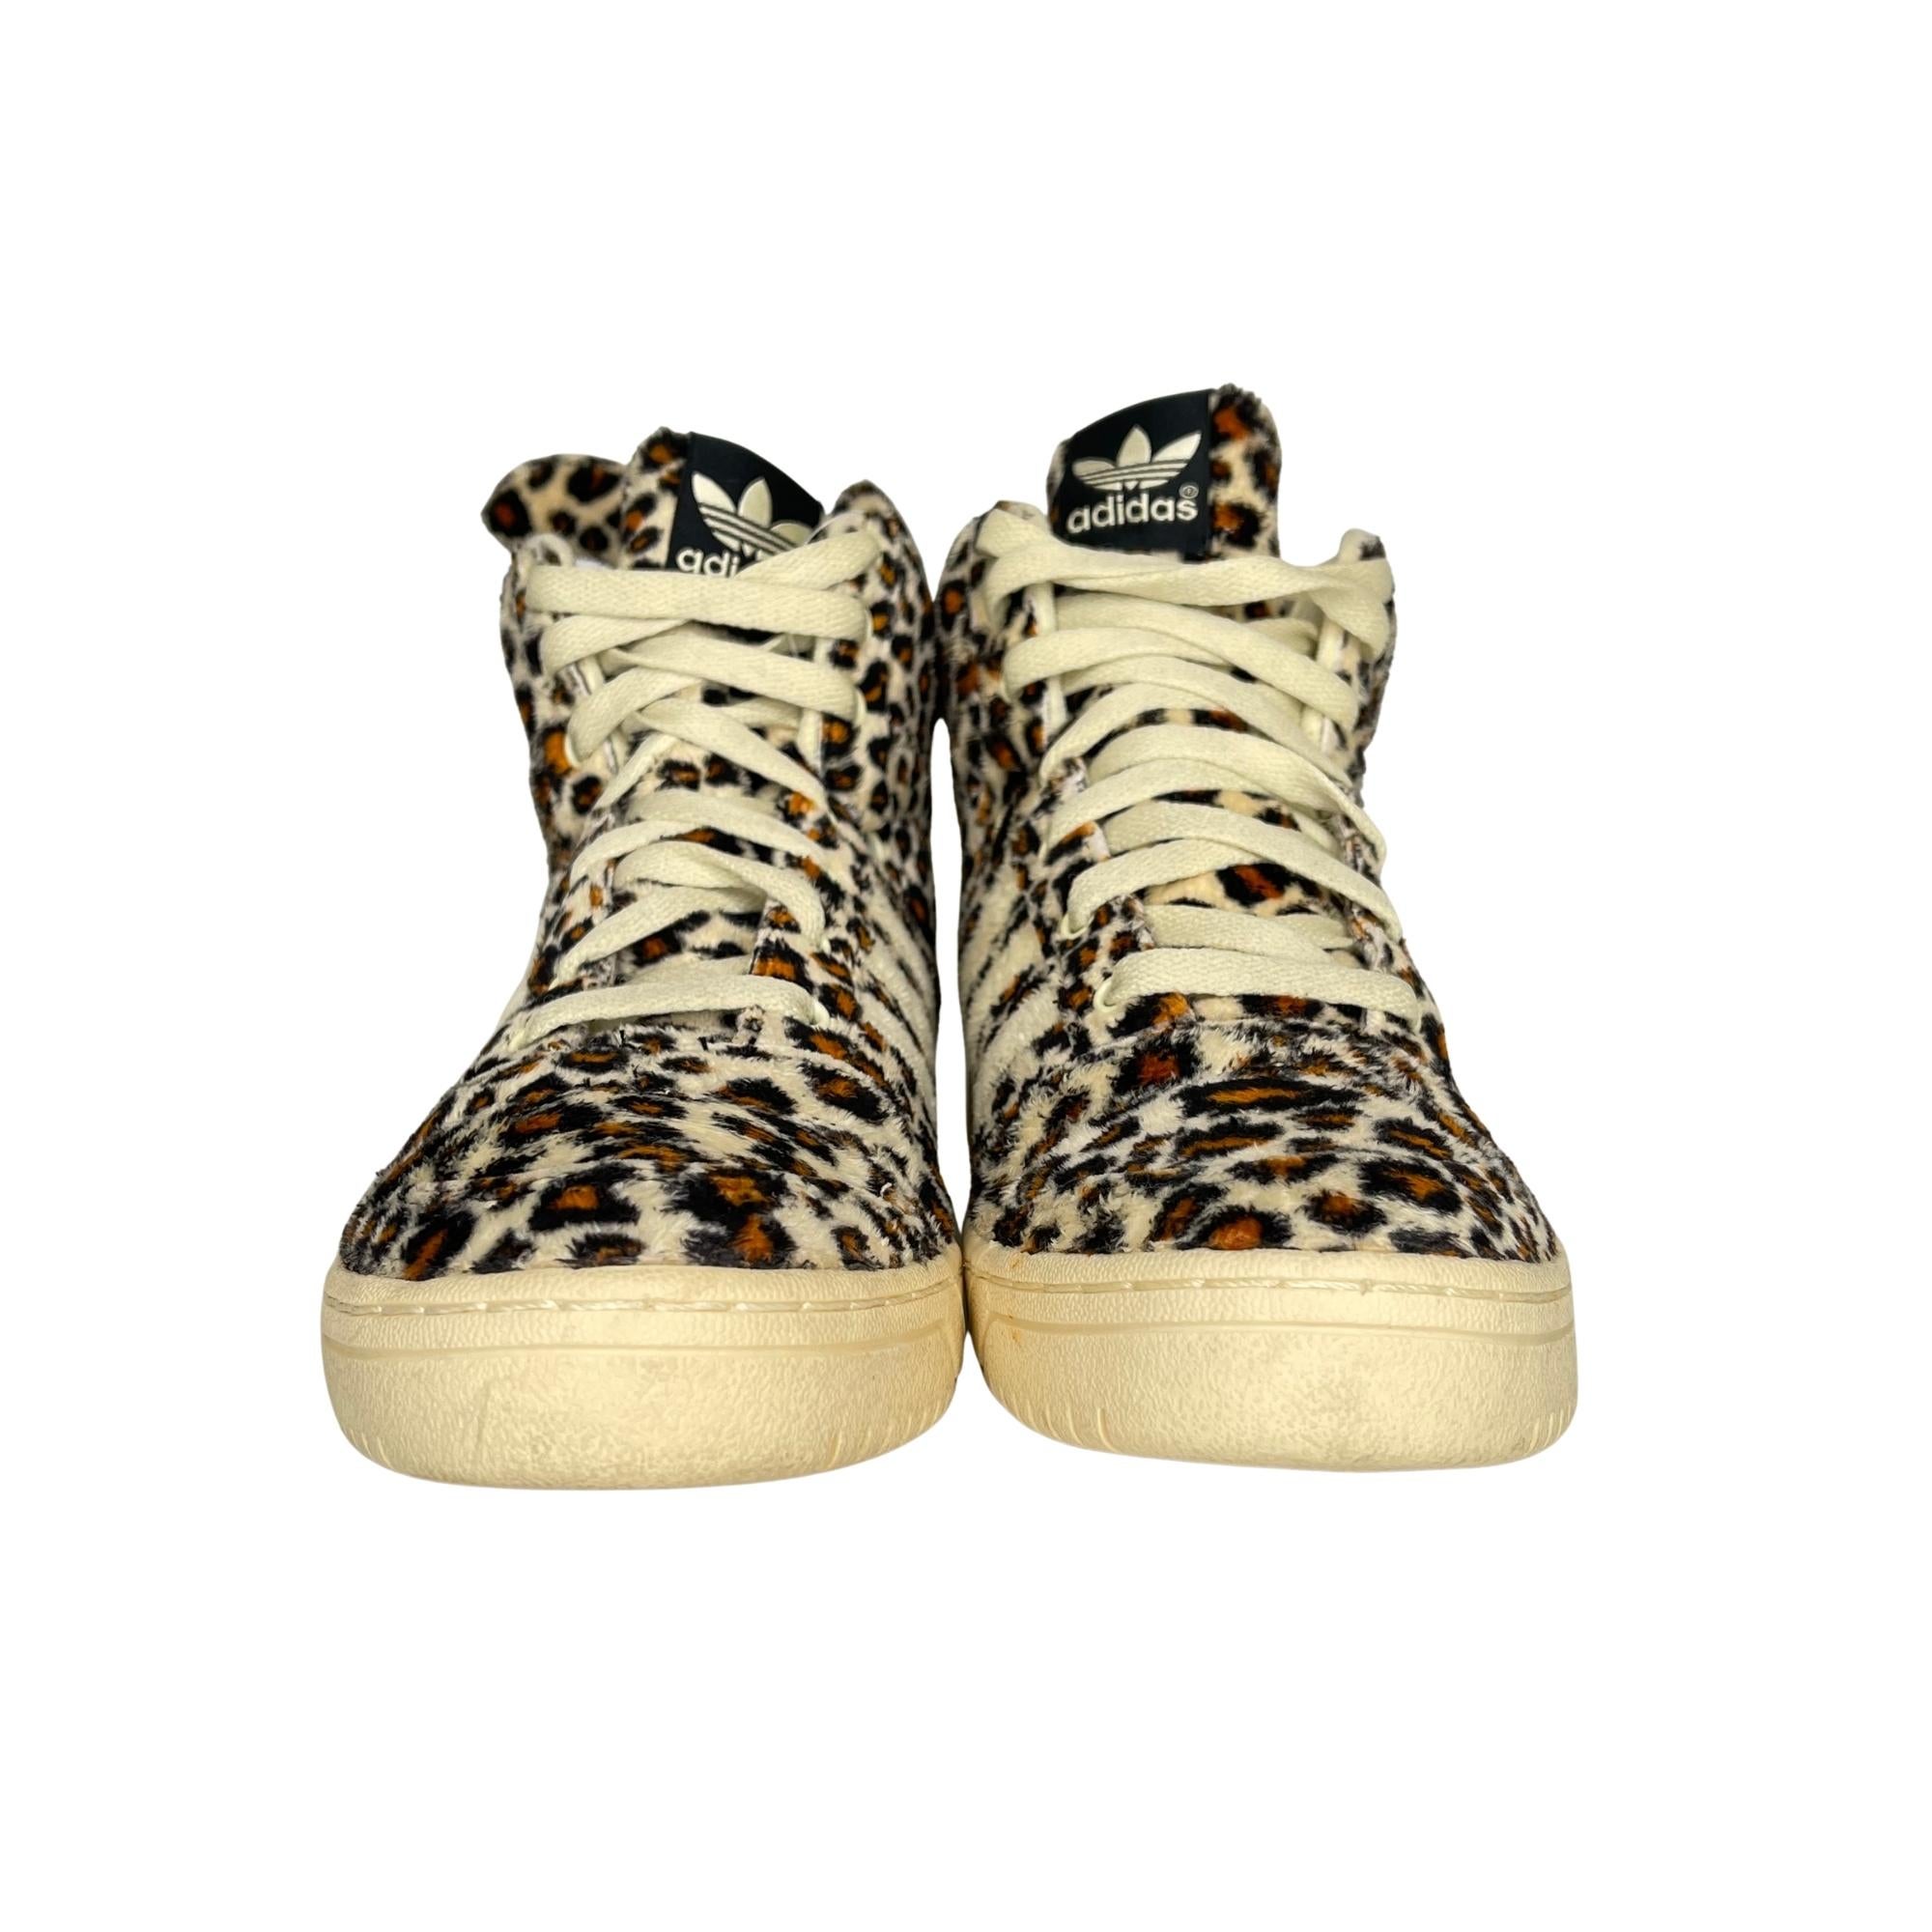 jeremy scott adidas leopard tail